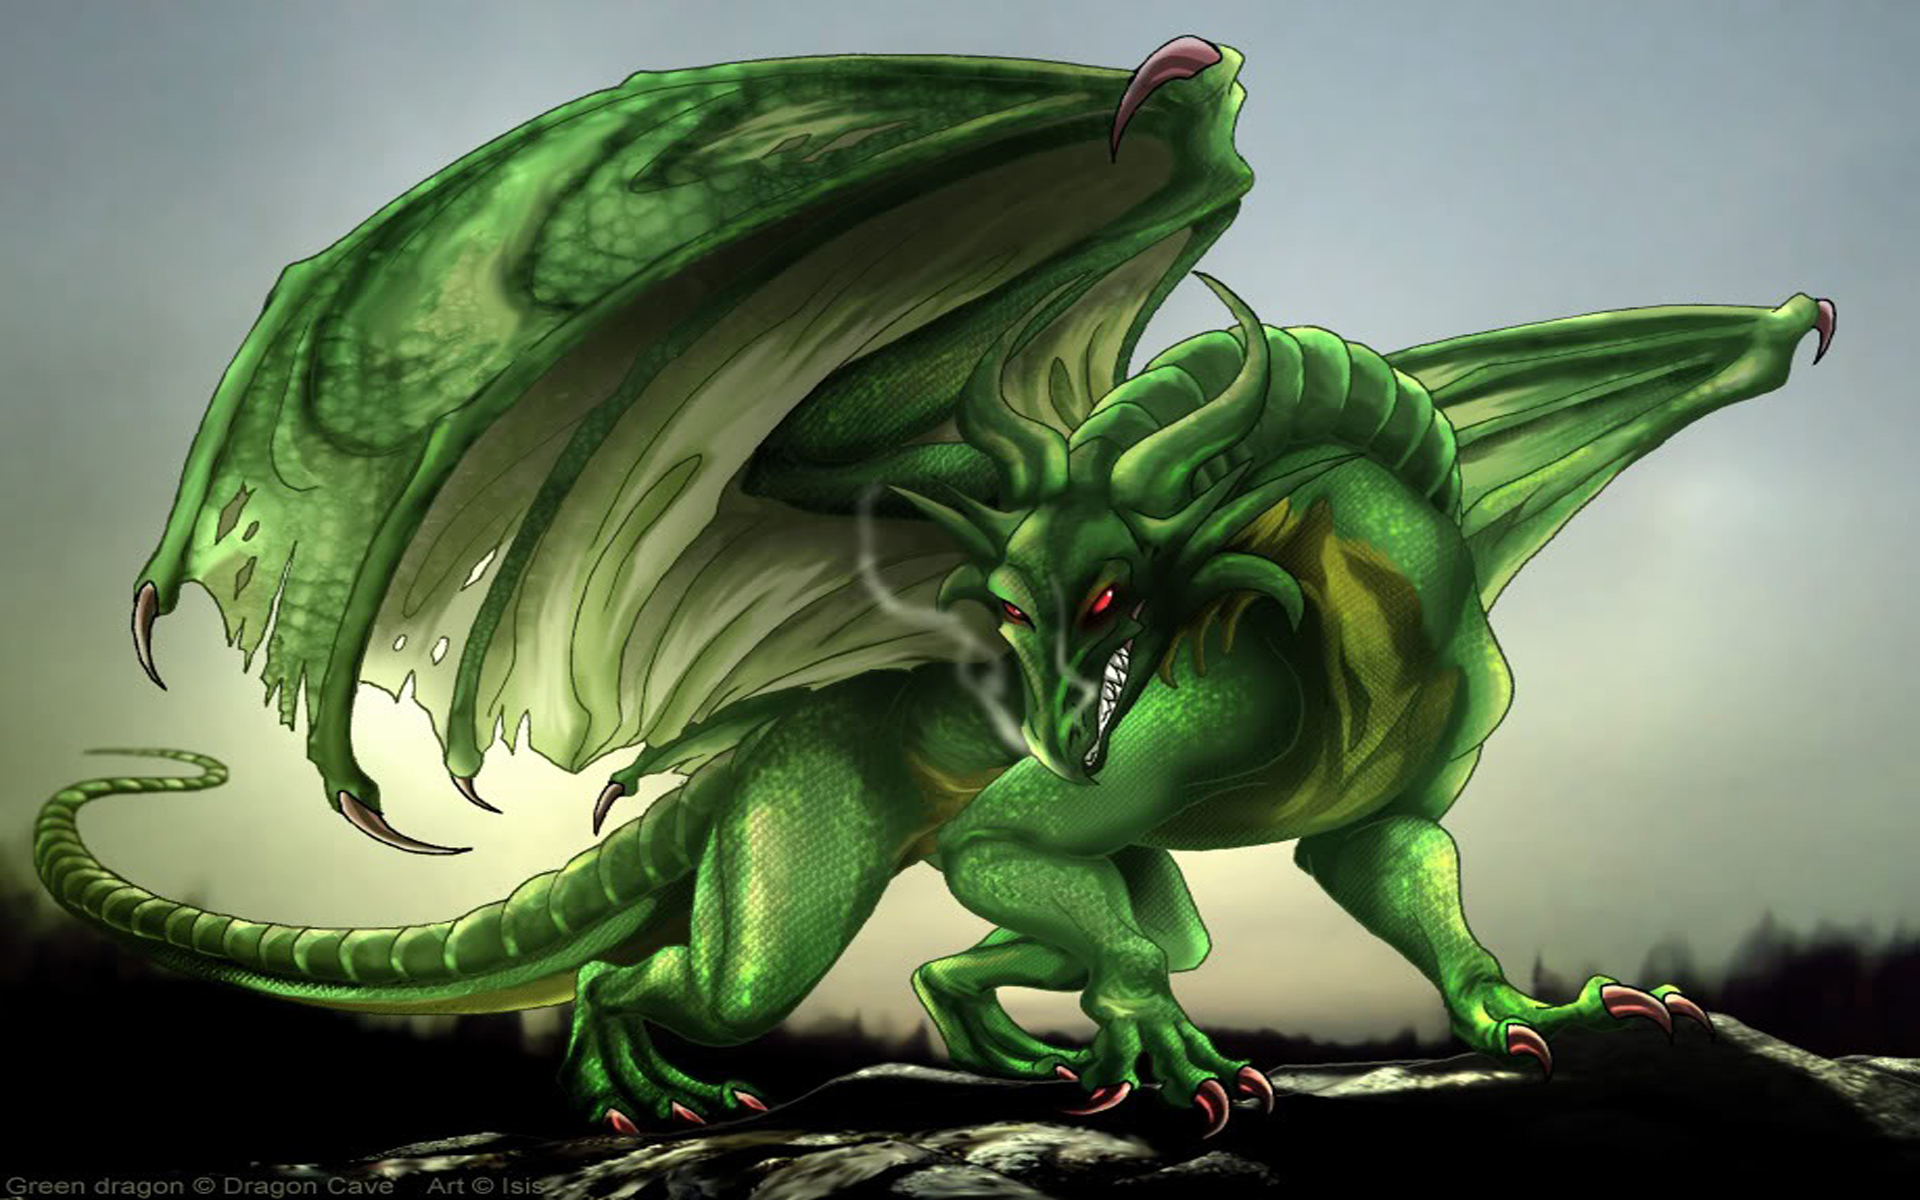 Green Dragon Fantasy Digital Art Hd Desktop Wallpaper : Wallpapers13.com